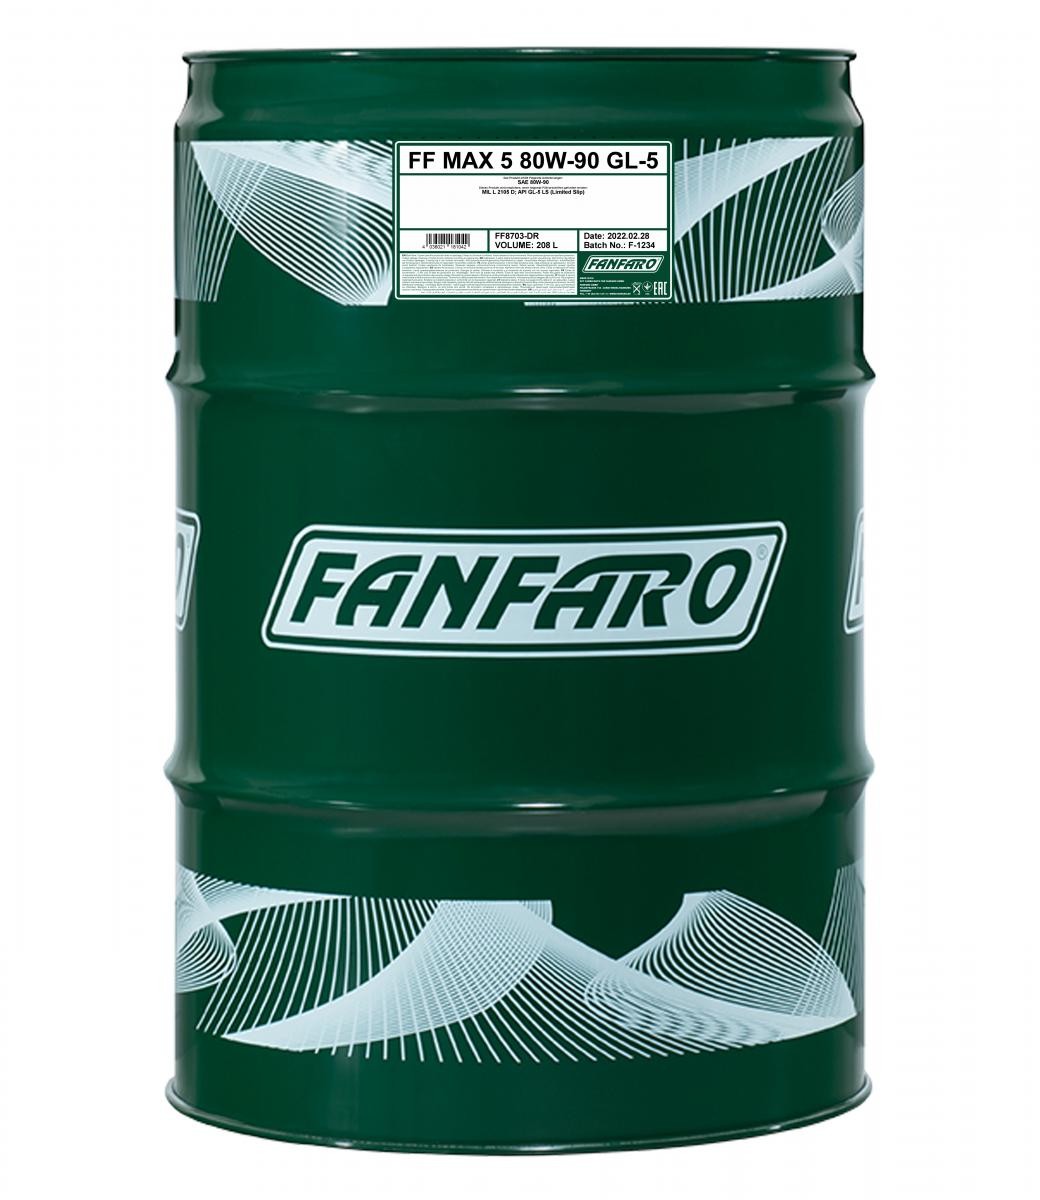 FANFARO MAX 5 FF8703-DR Manual Transmission Oil Capacity: 208l, 80W-90